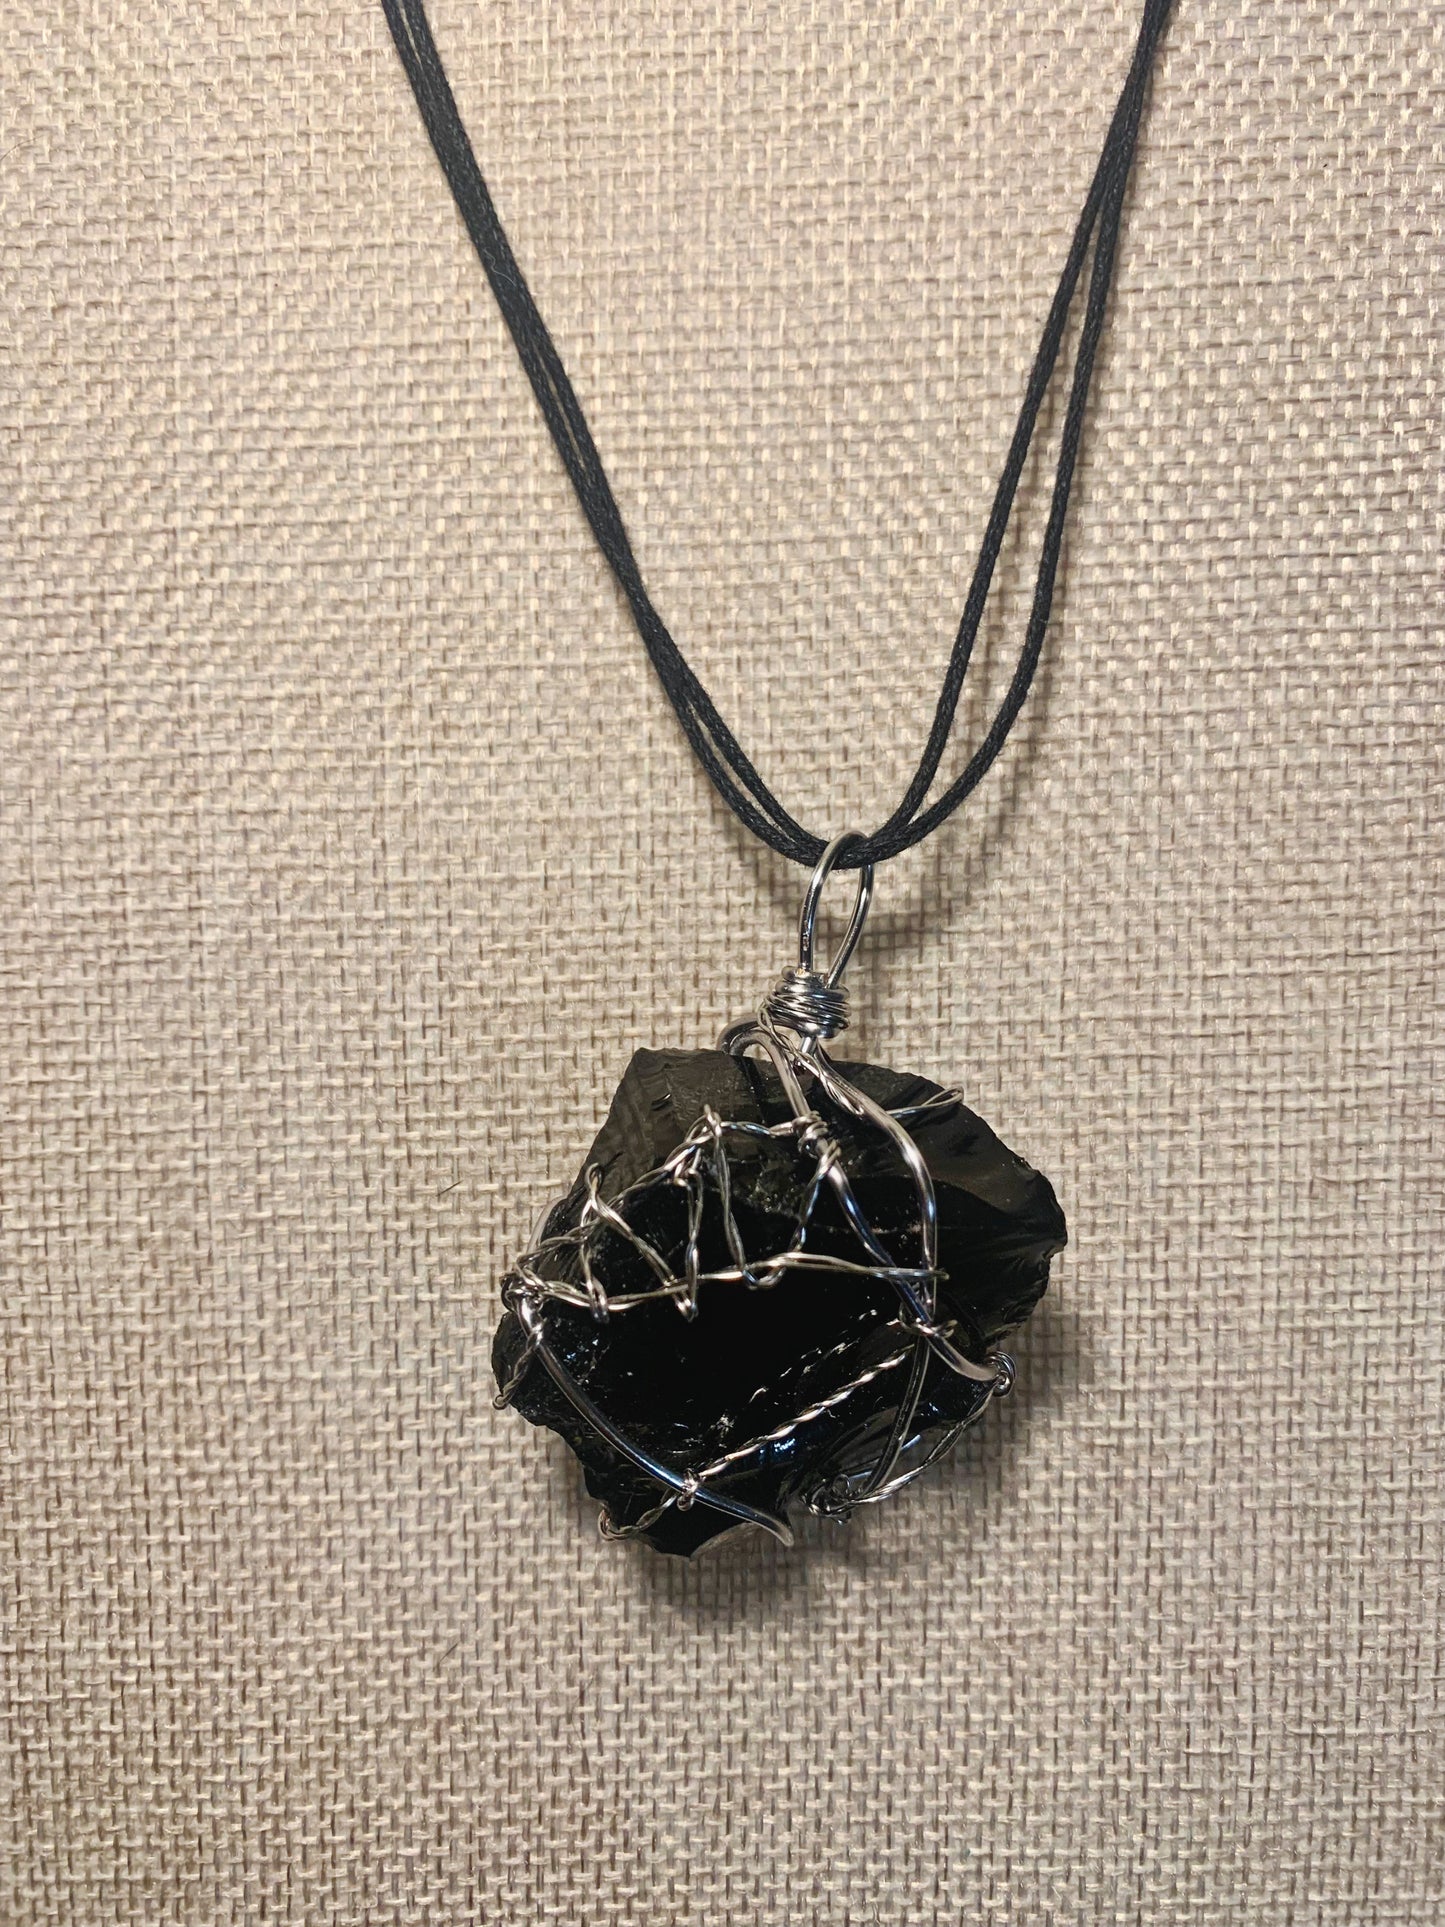 Wire Wrapped Black Obsidian